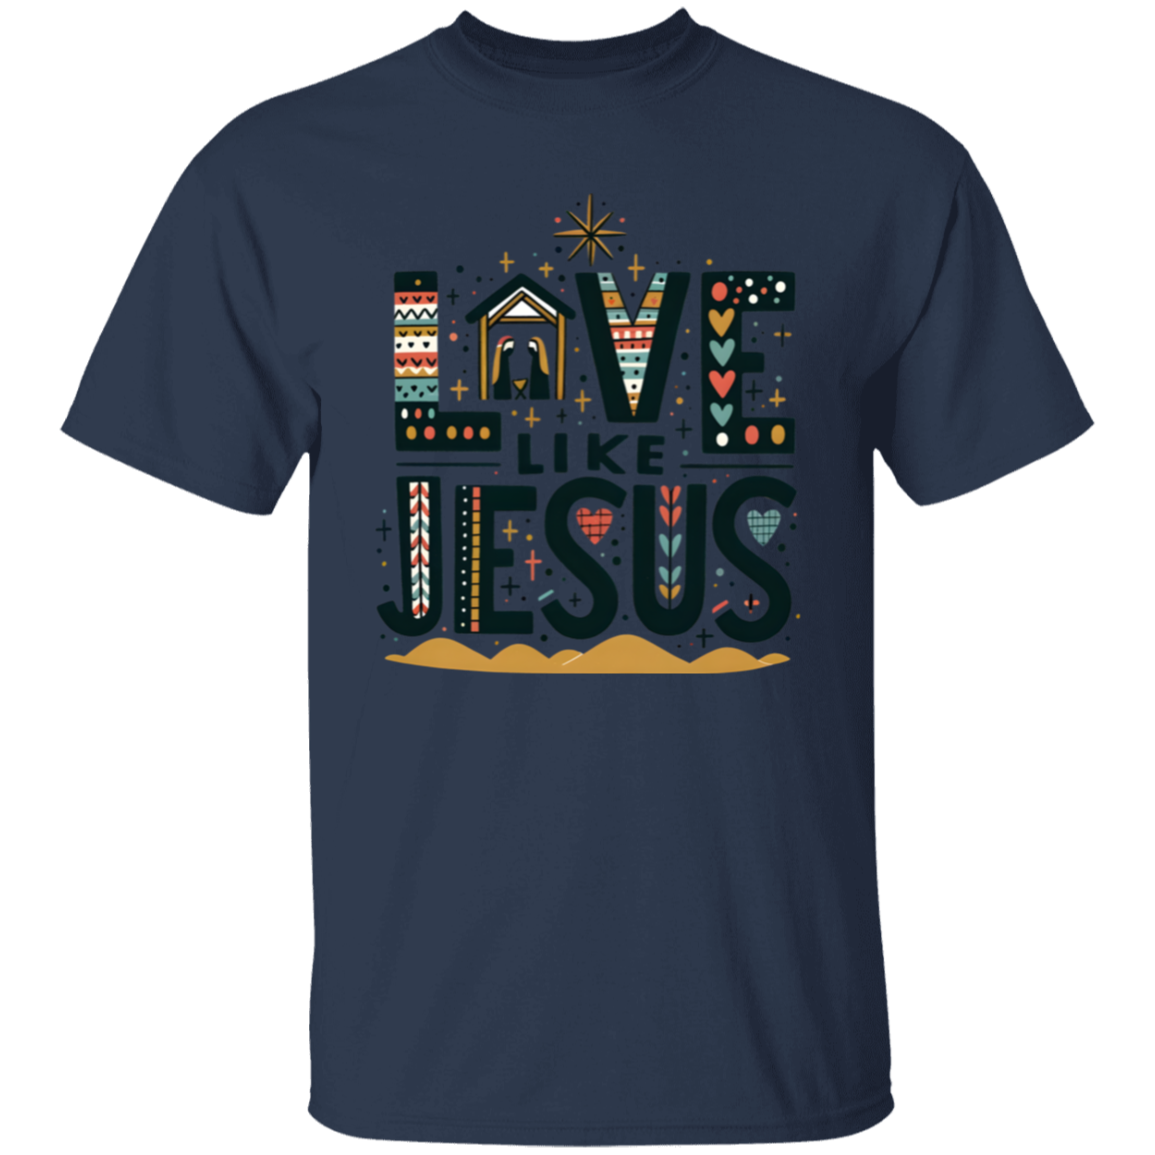 Love Like Jesus Christmas T-Shirt